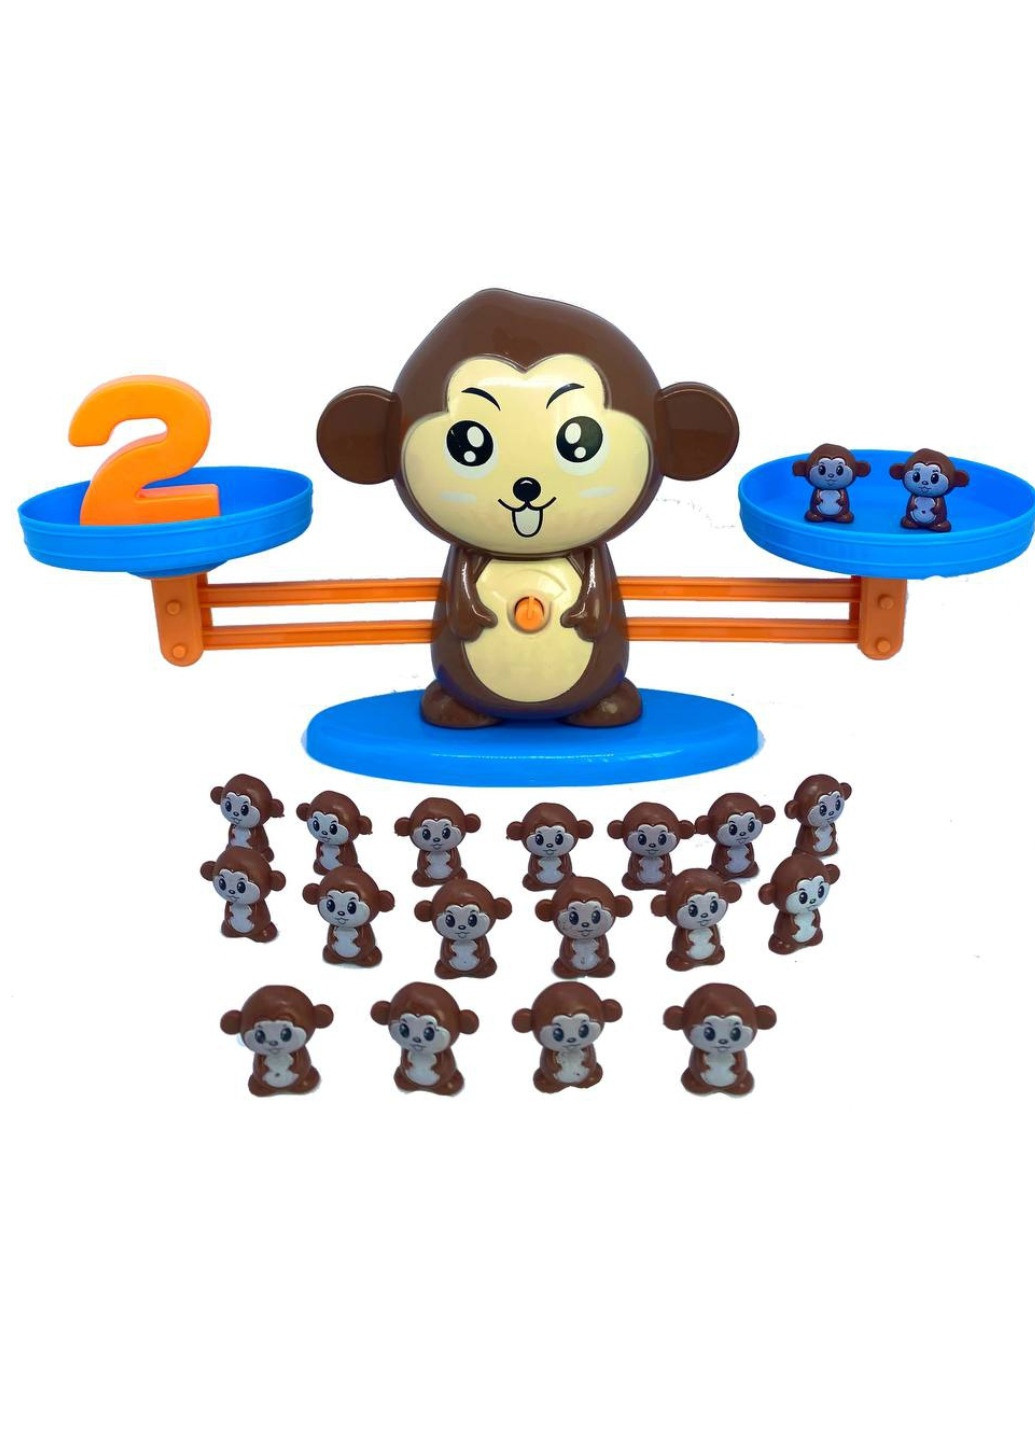 Мавпочка ваги з цифрами дитяча математична розвиваюча гра Caunting Monkey No Brand (259906540)